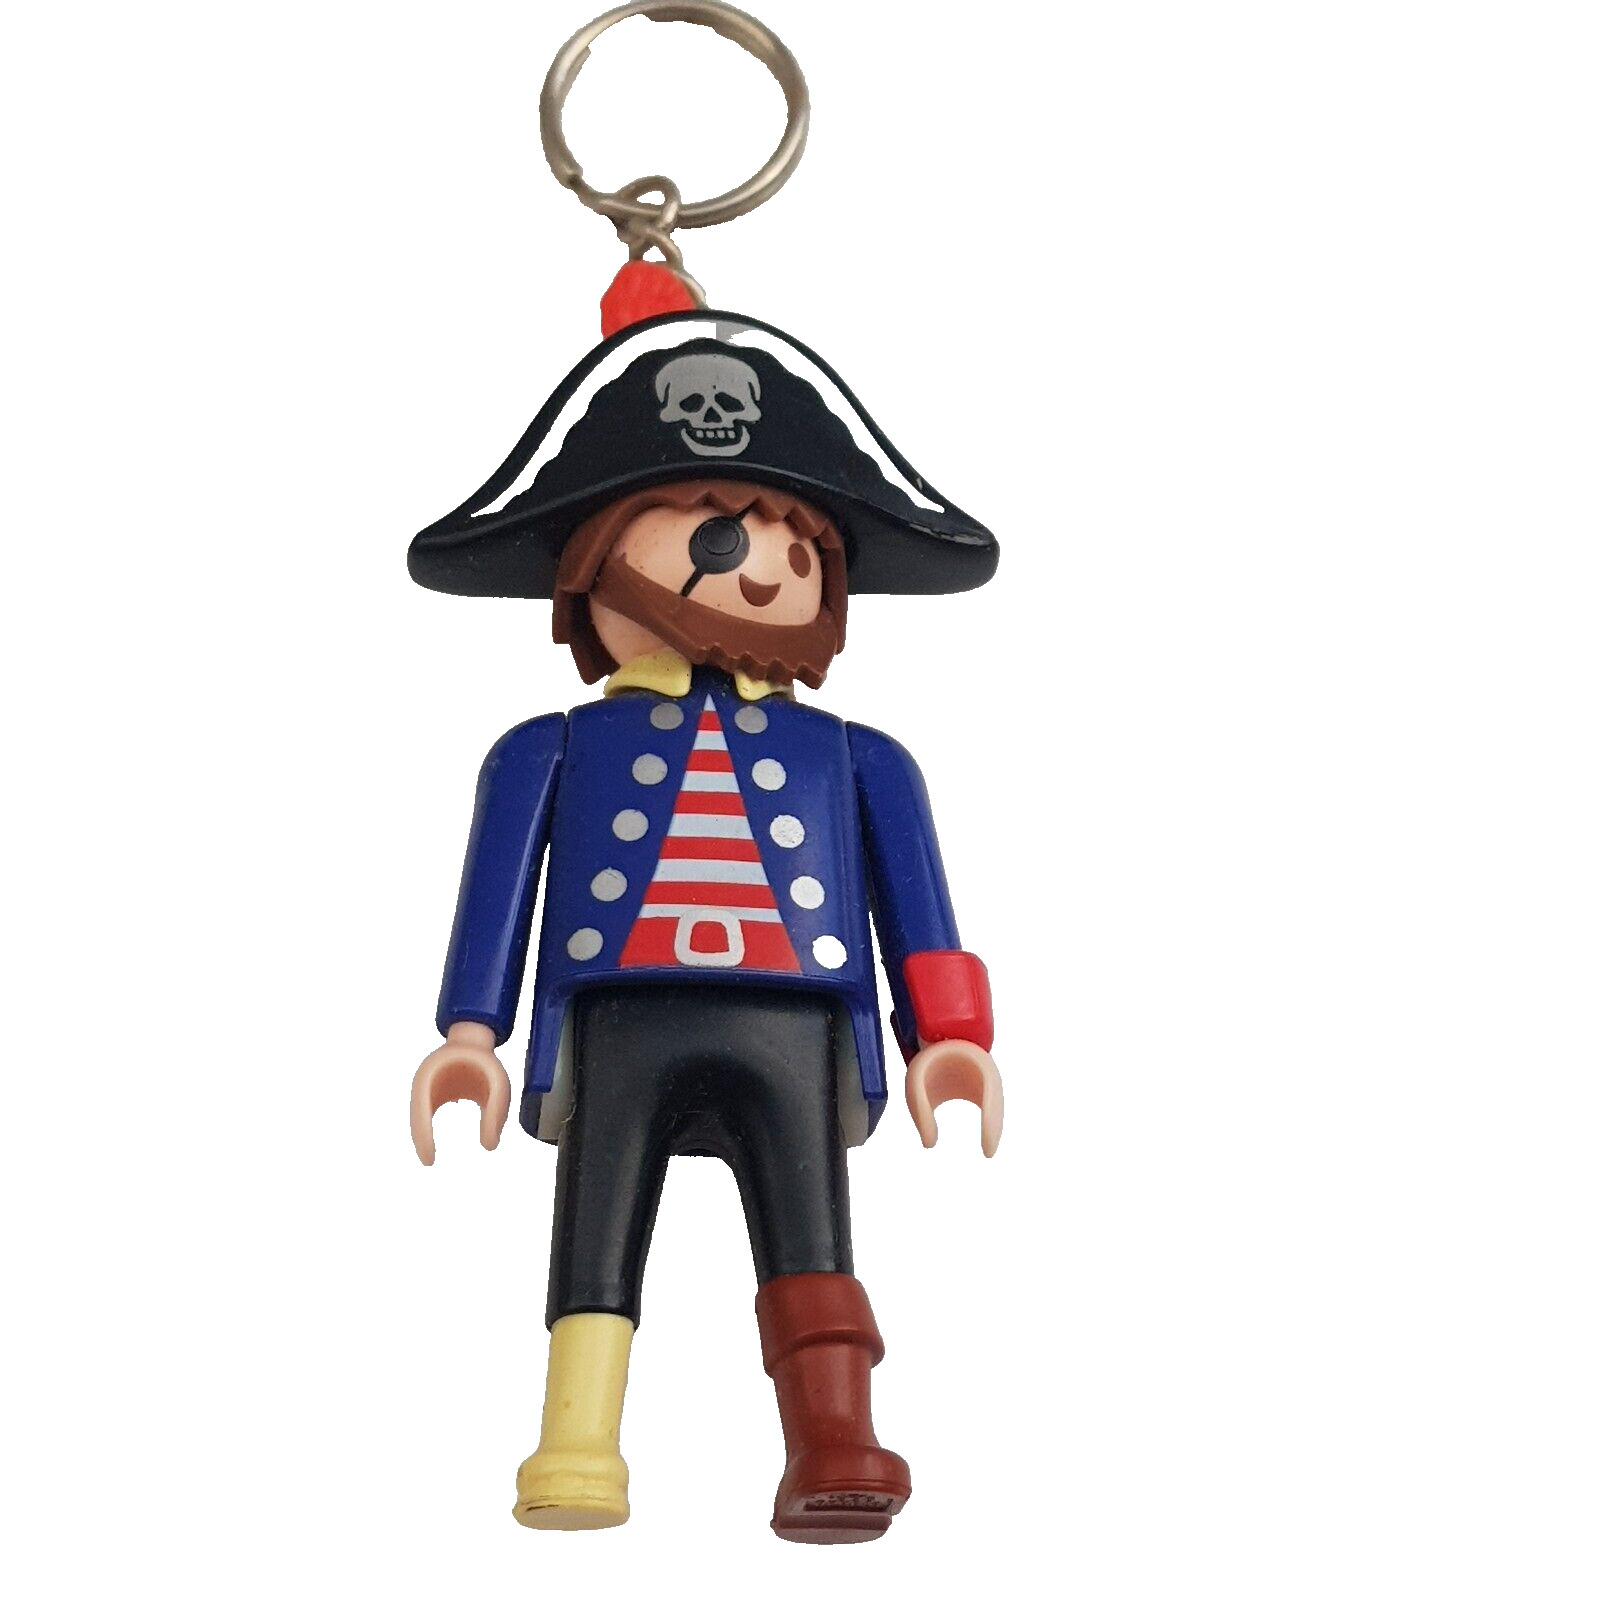 1996 Playmobil Pirate Rey Plastic Pirate promotional figure key ring